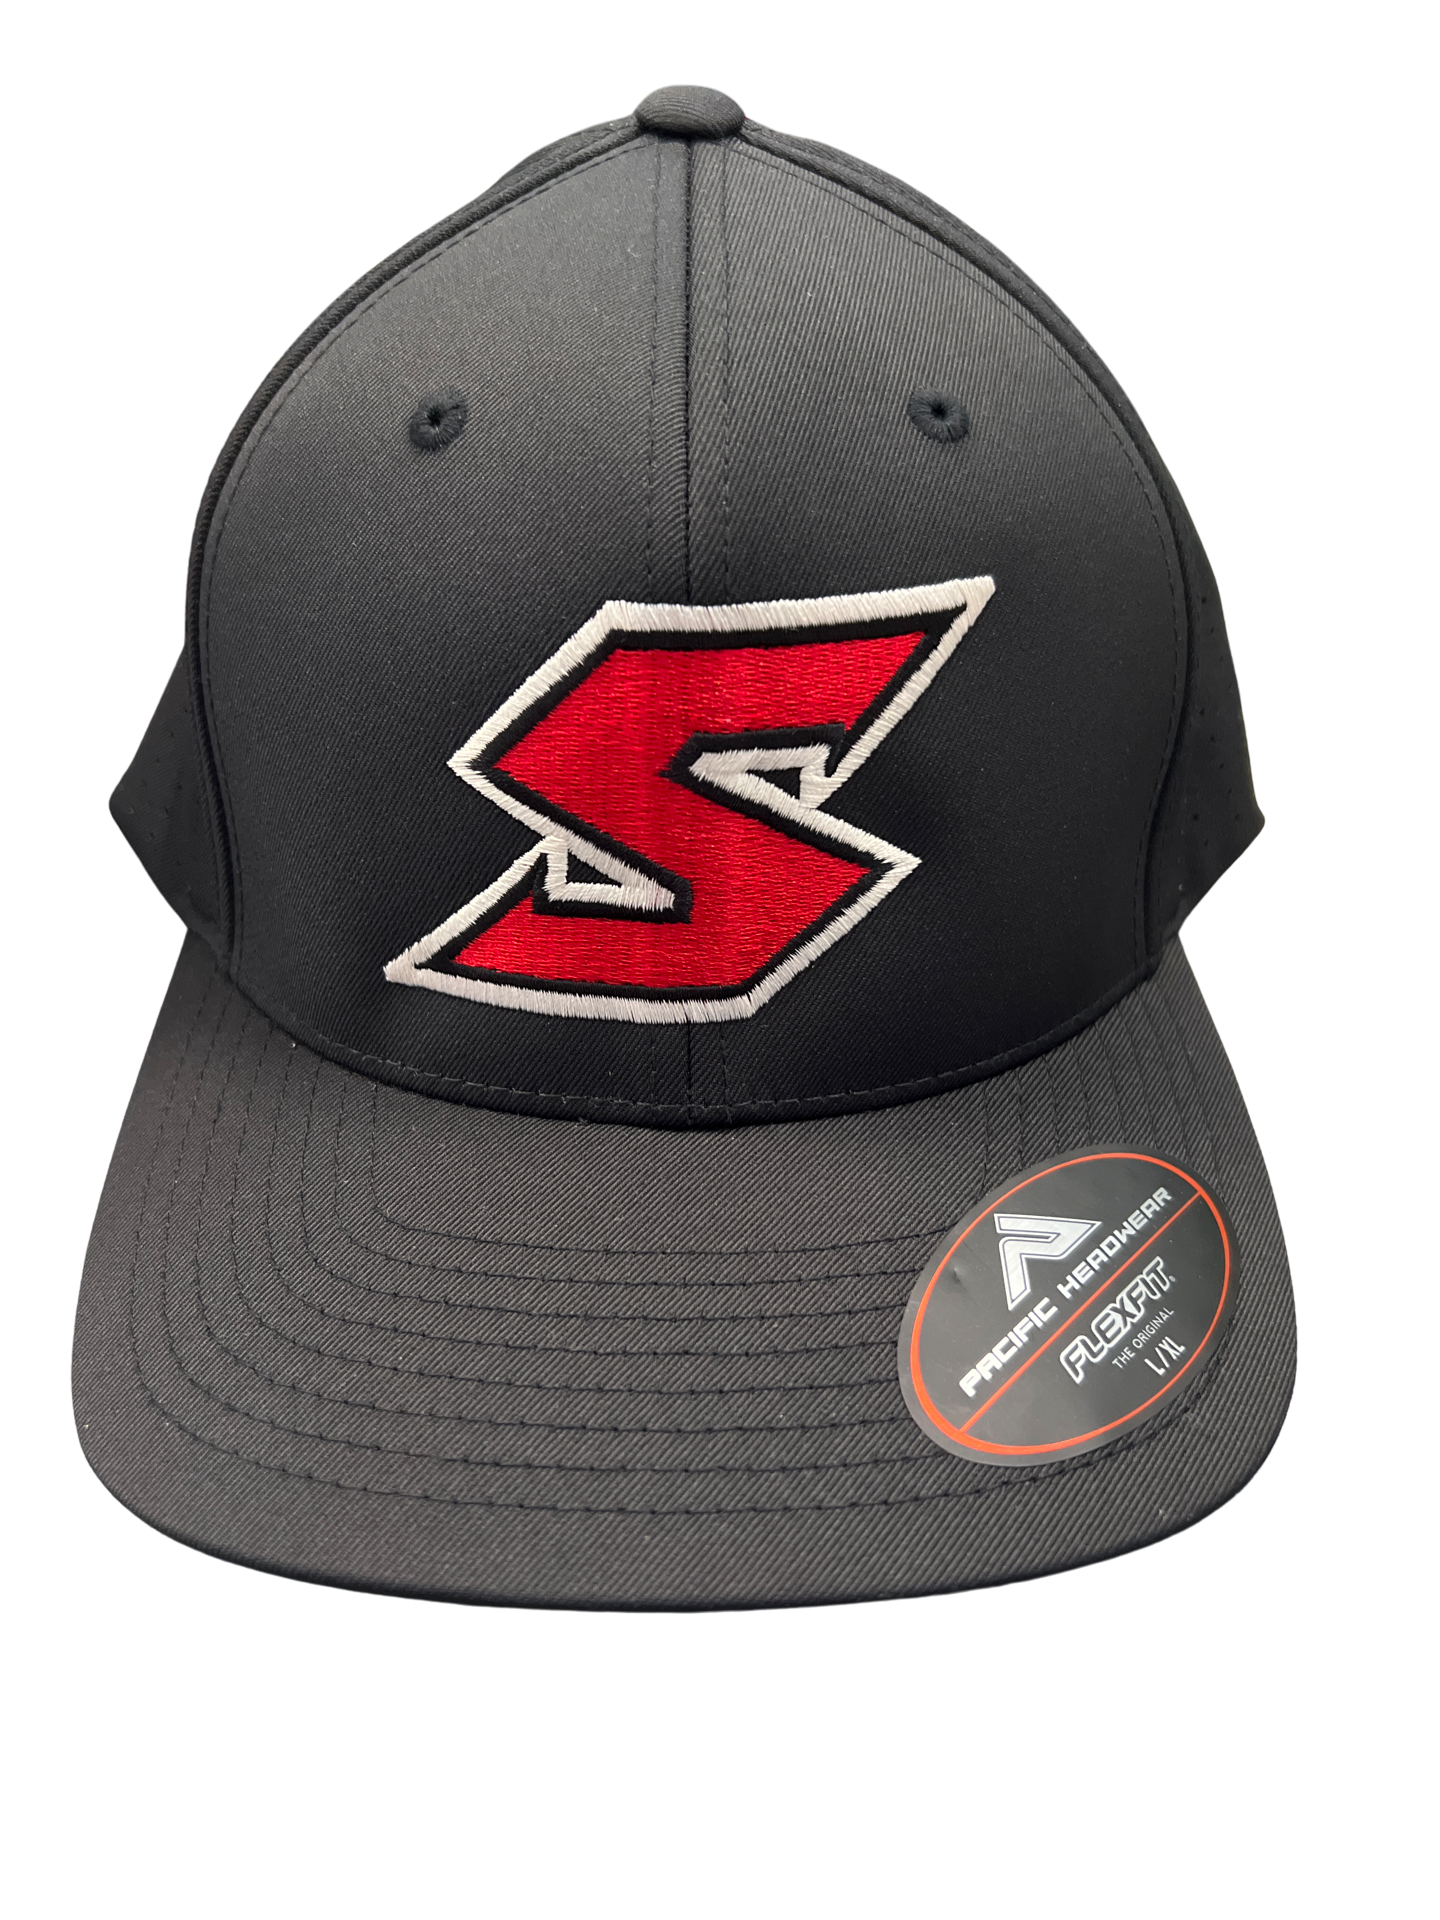 Black/Red 474 Softball - S Flexfit Suncoast Hat Suncoast